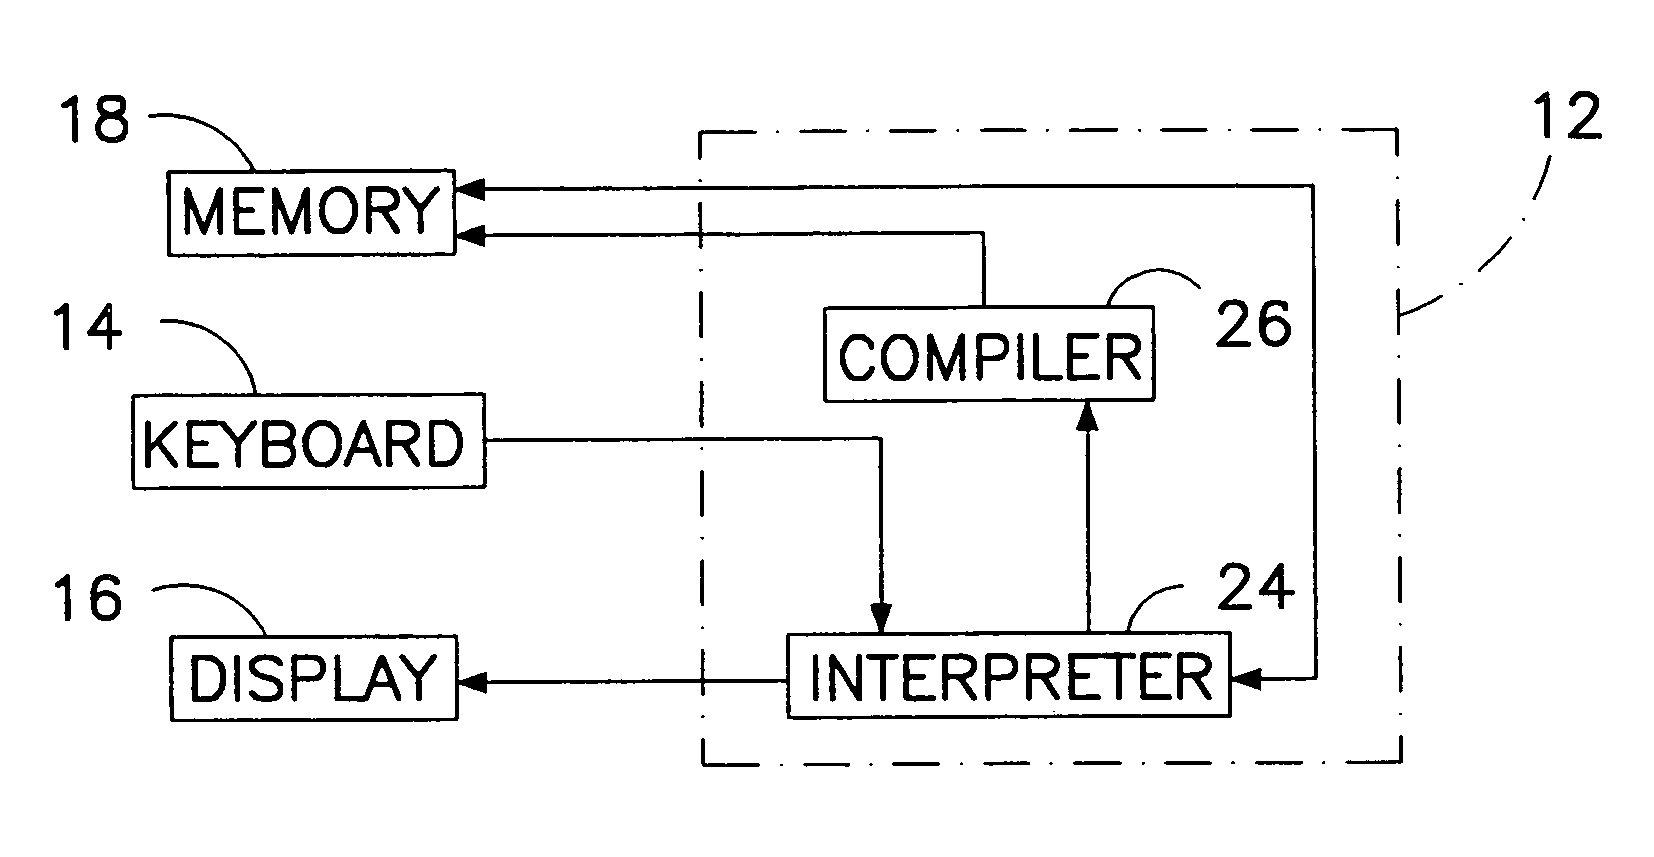 Computer multi-tasking via virtual threading using an interpreter